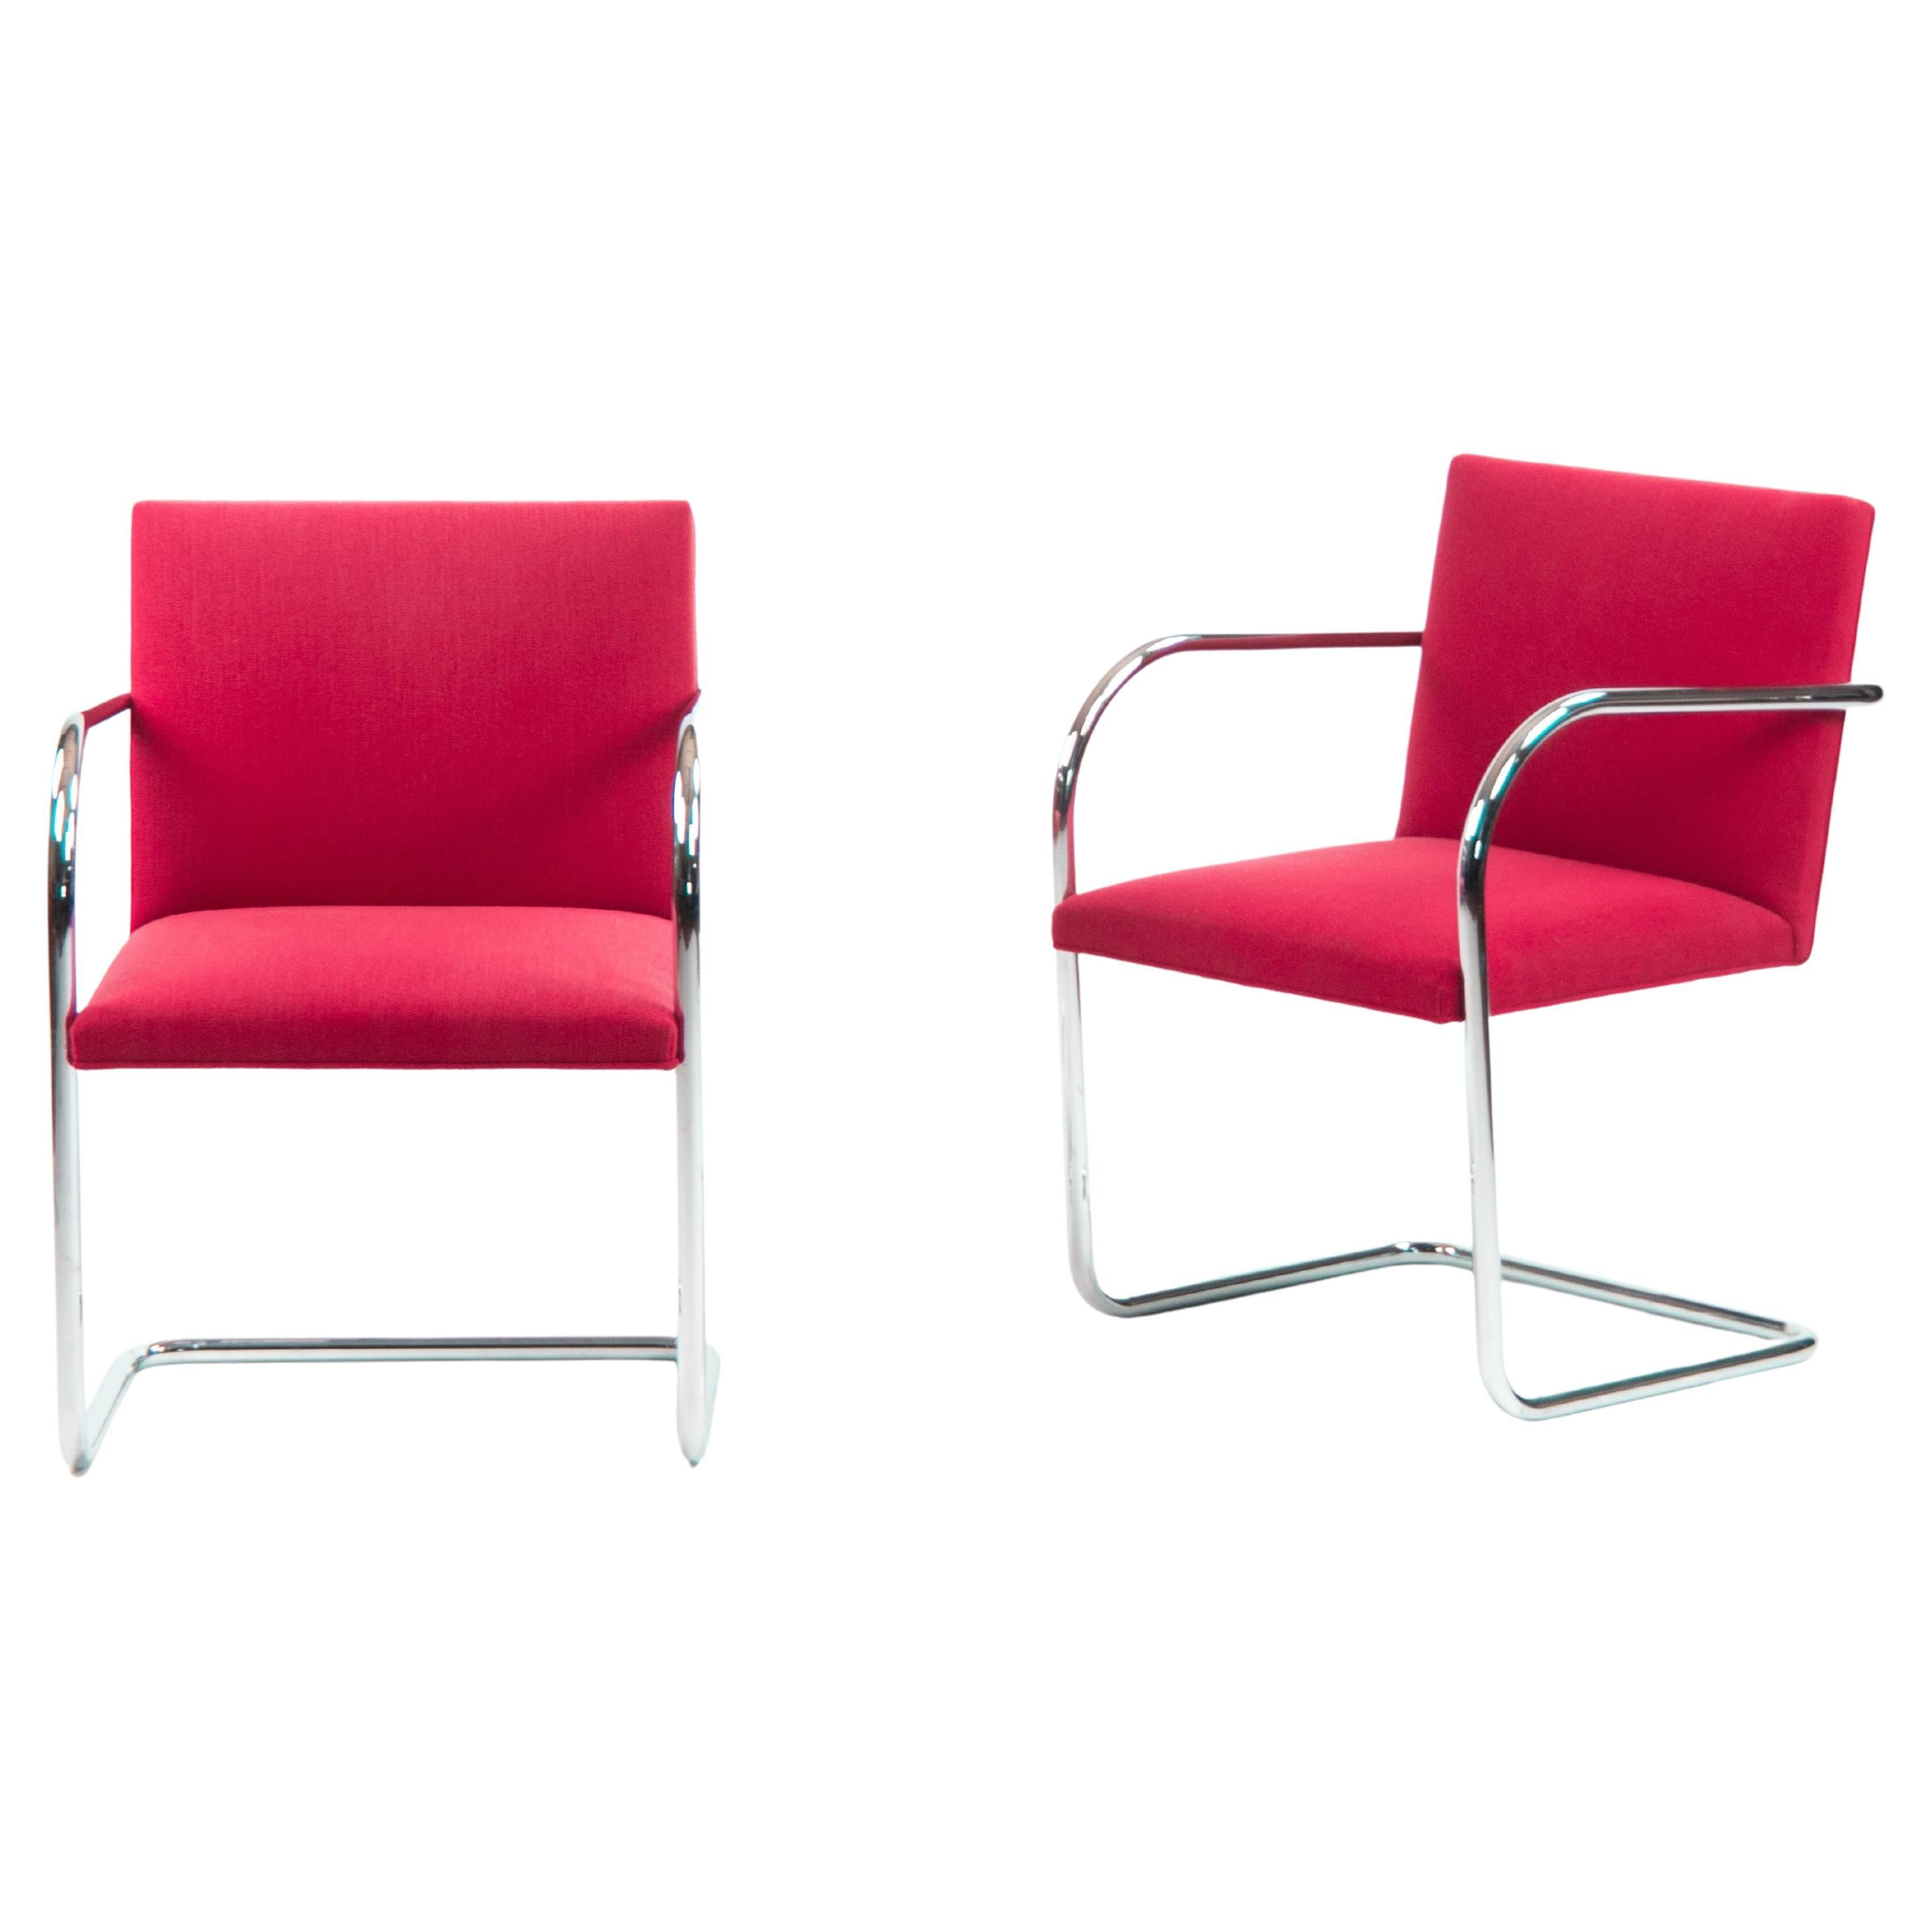 2010 Mies van der Rohe for Knoll Brno Tubular Chrome Dining / Arm Chairs For Sale